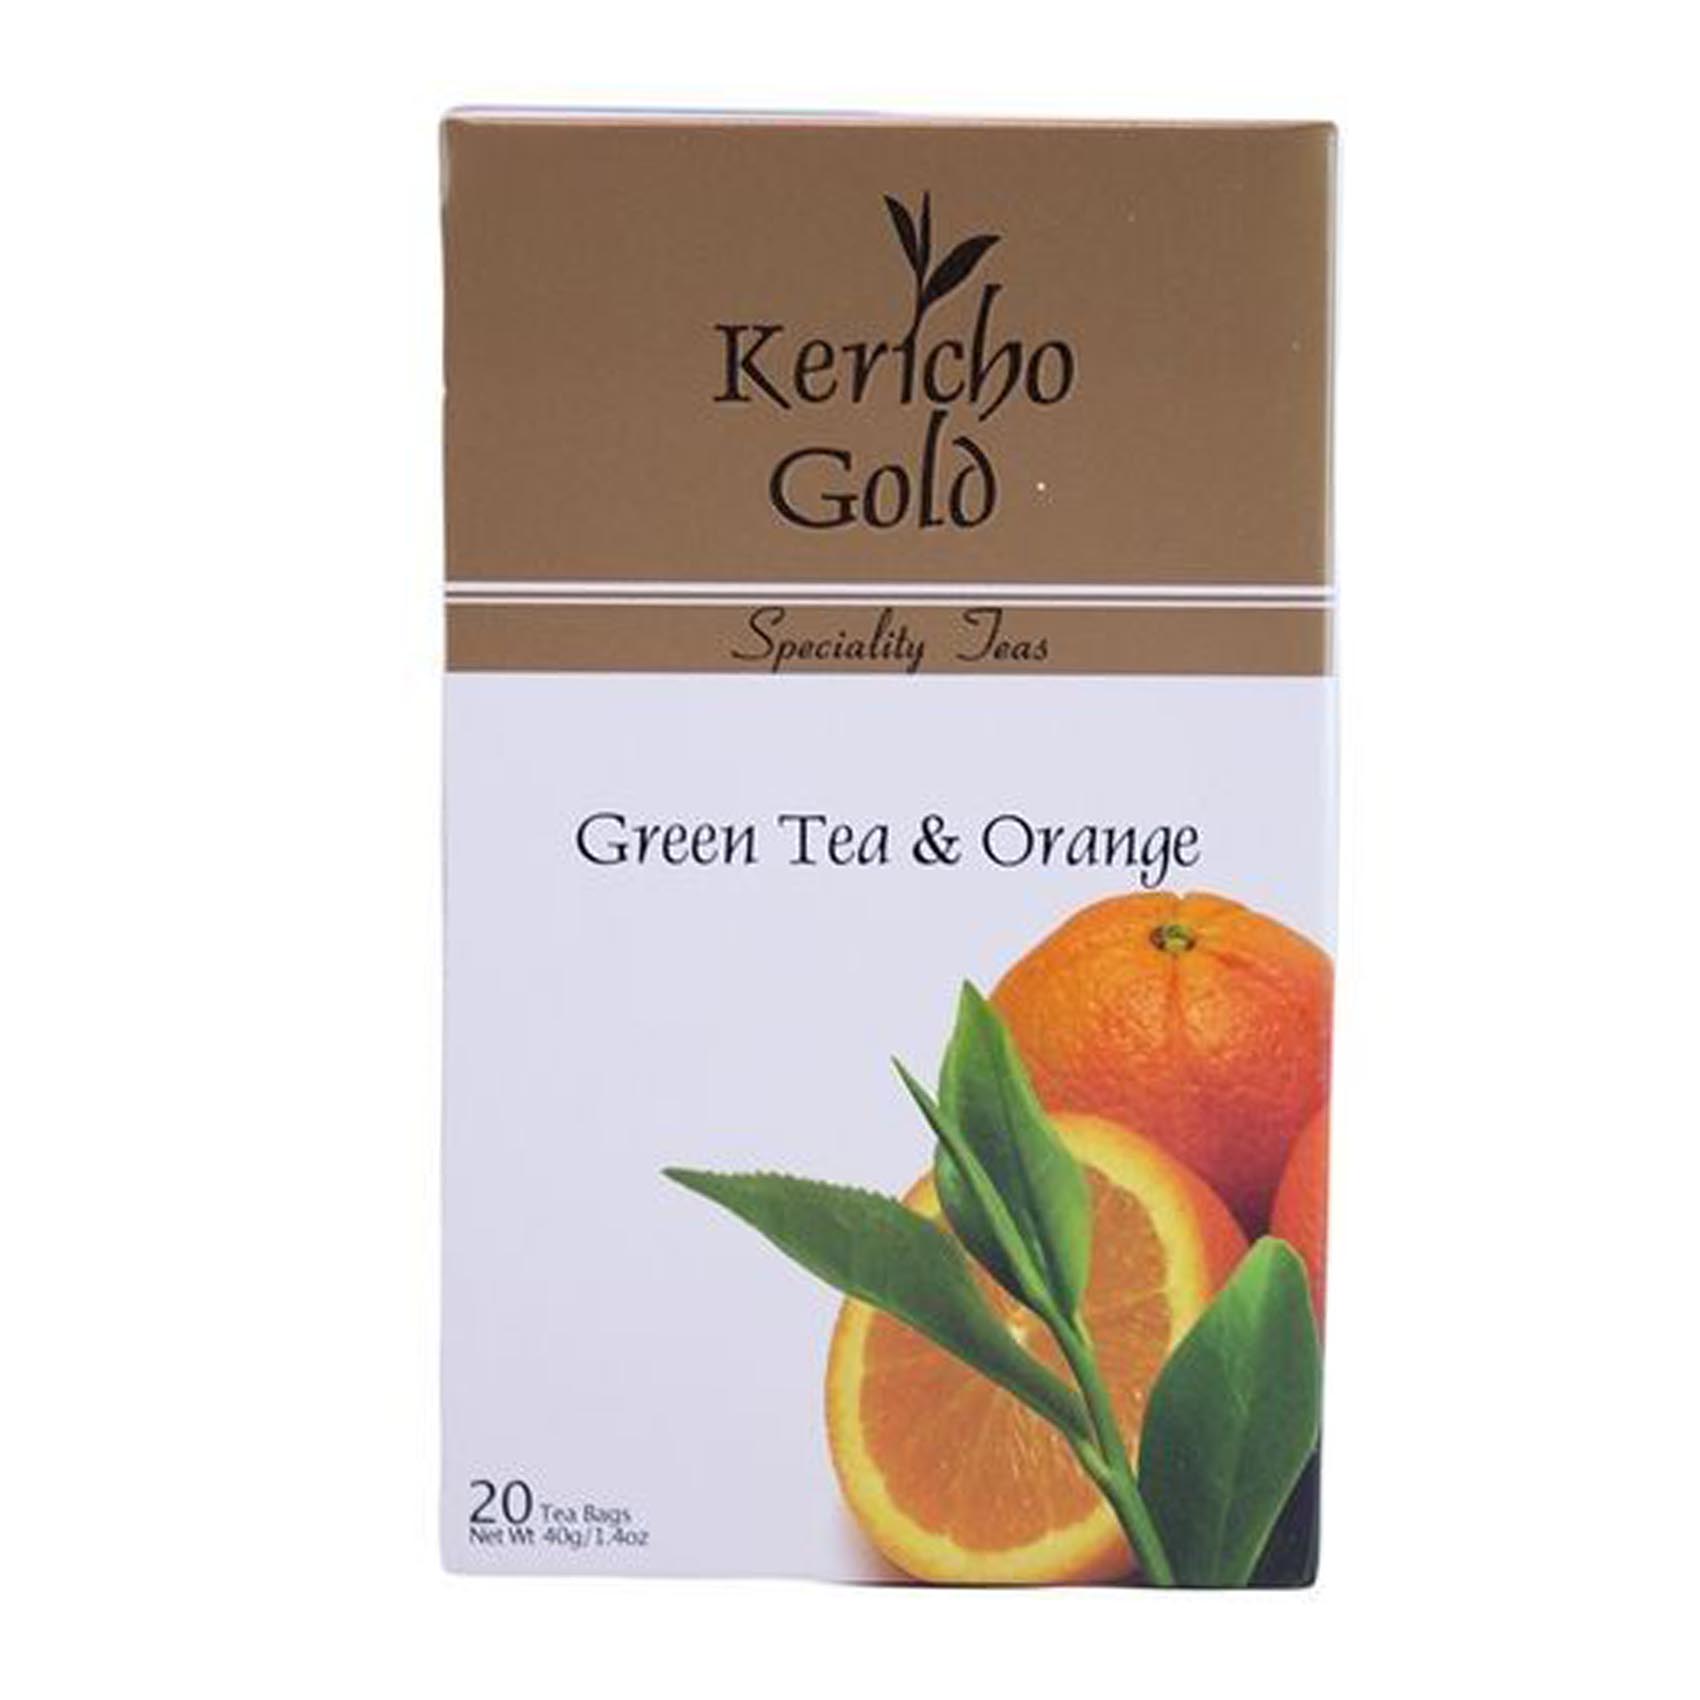 Kericho Gold Green Tea And Orange Tea Bags 2g x Pack of 20